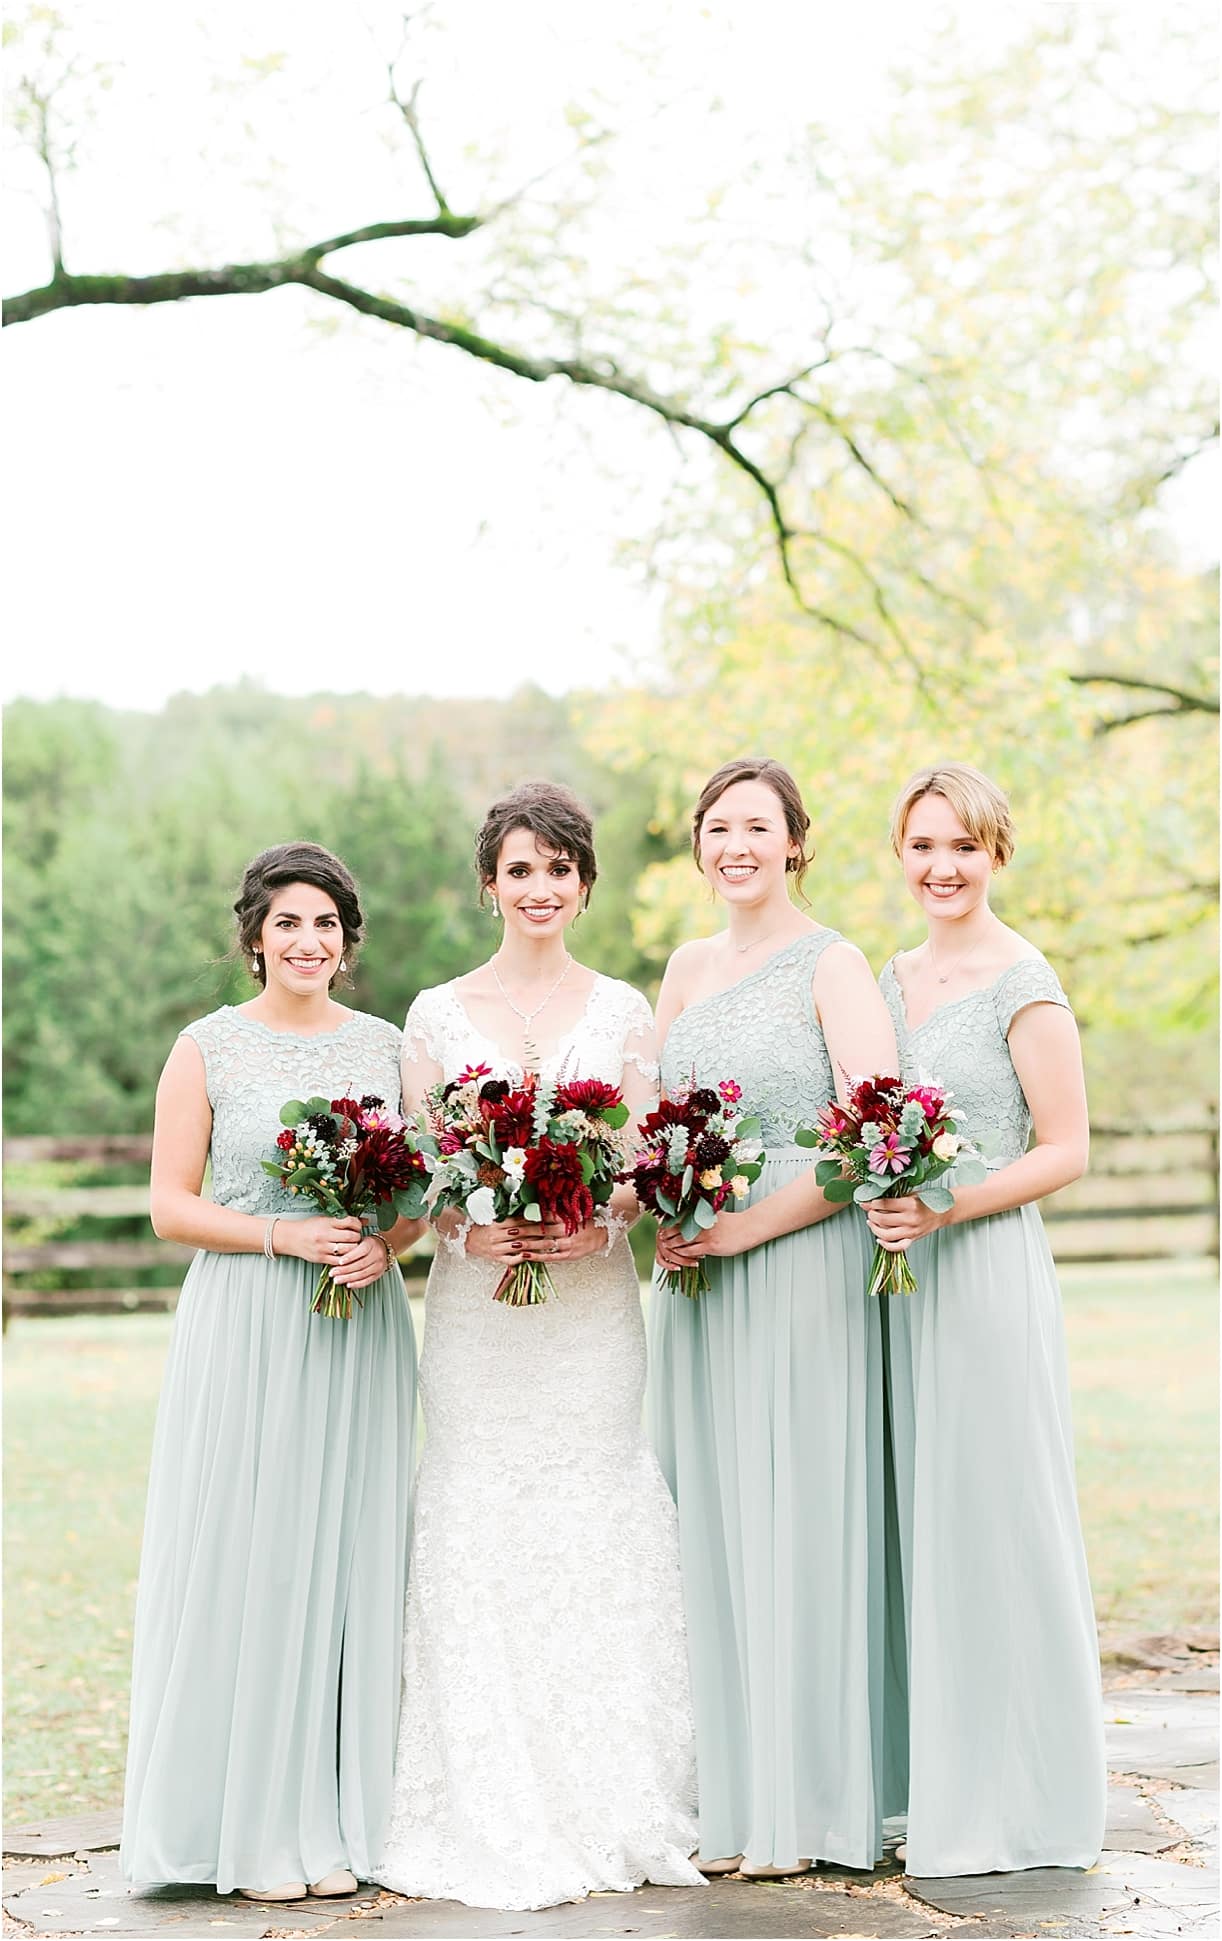 Dusty Blue Wedding Color Palette | Hill City Bride Virginia Weddings Wedding Blog | Something Blue Bridesmaids